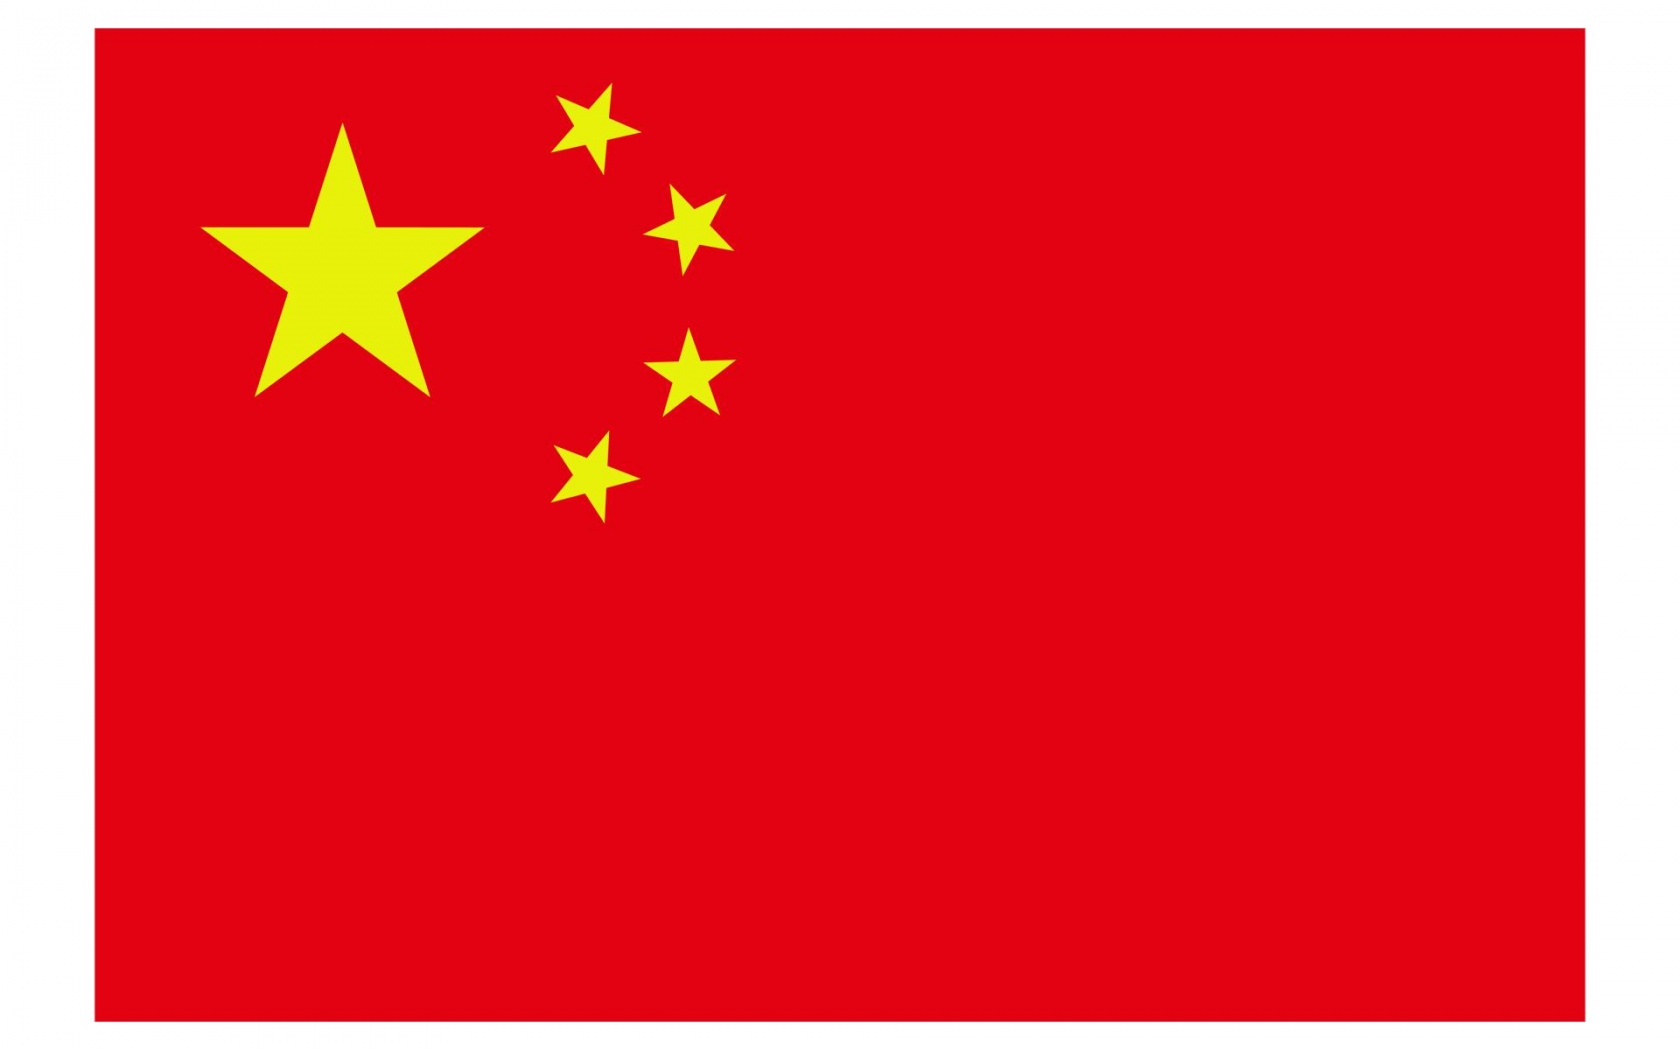 China Flag.png desktop wallpapers and stock photos